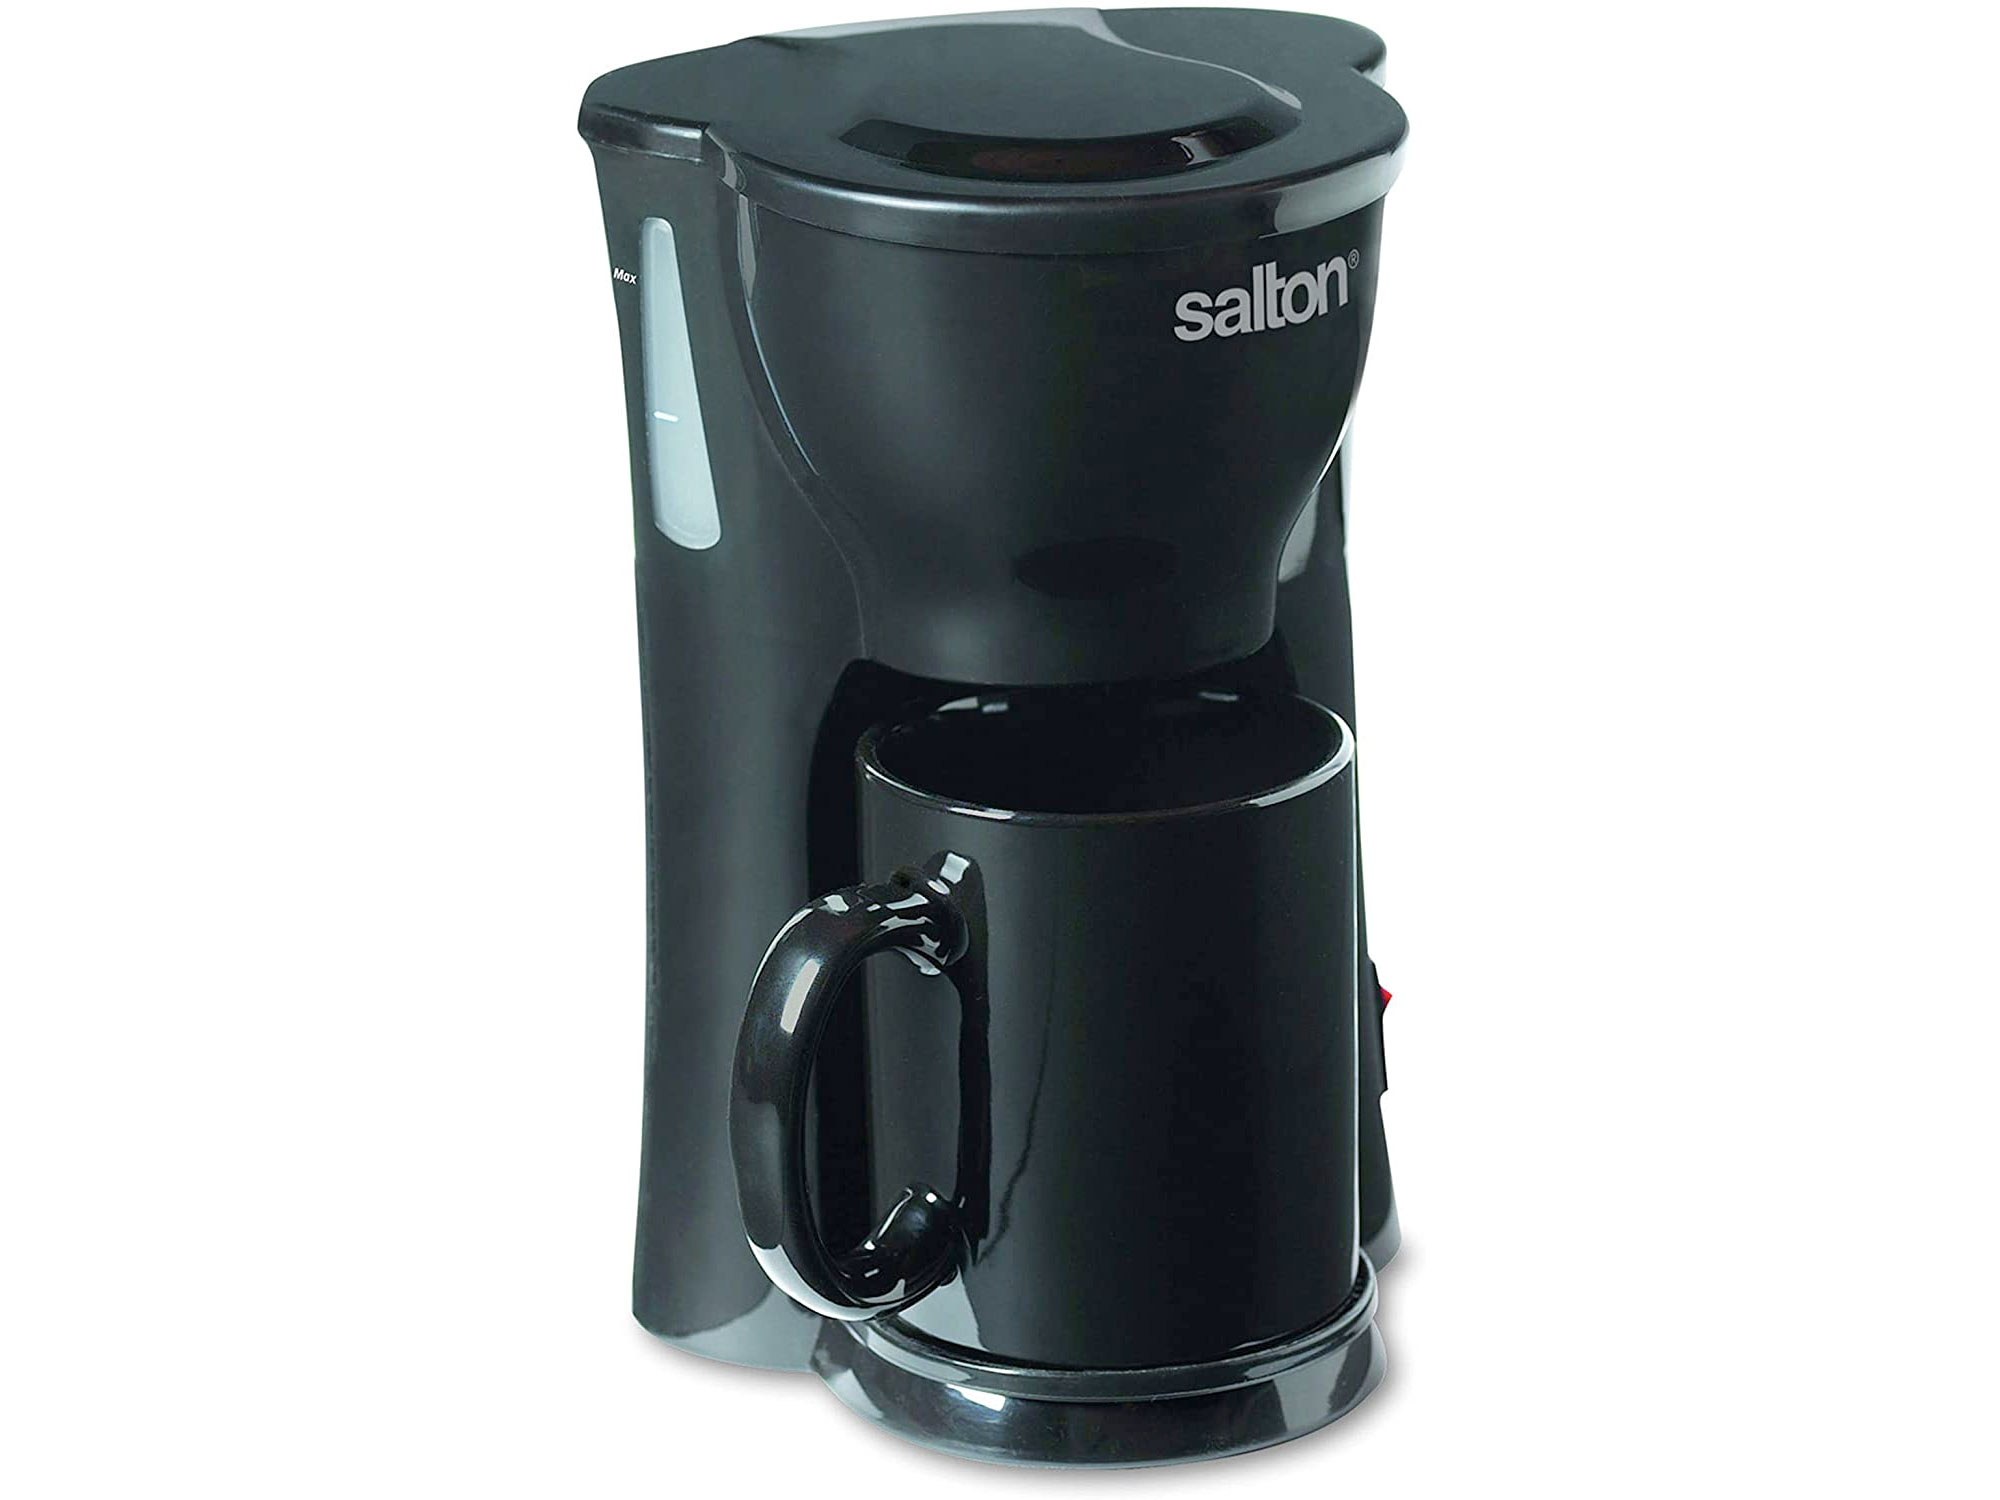 Amazon：Salton 1 Cup Drip Coffee Maker咖啡機只賣$13.98